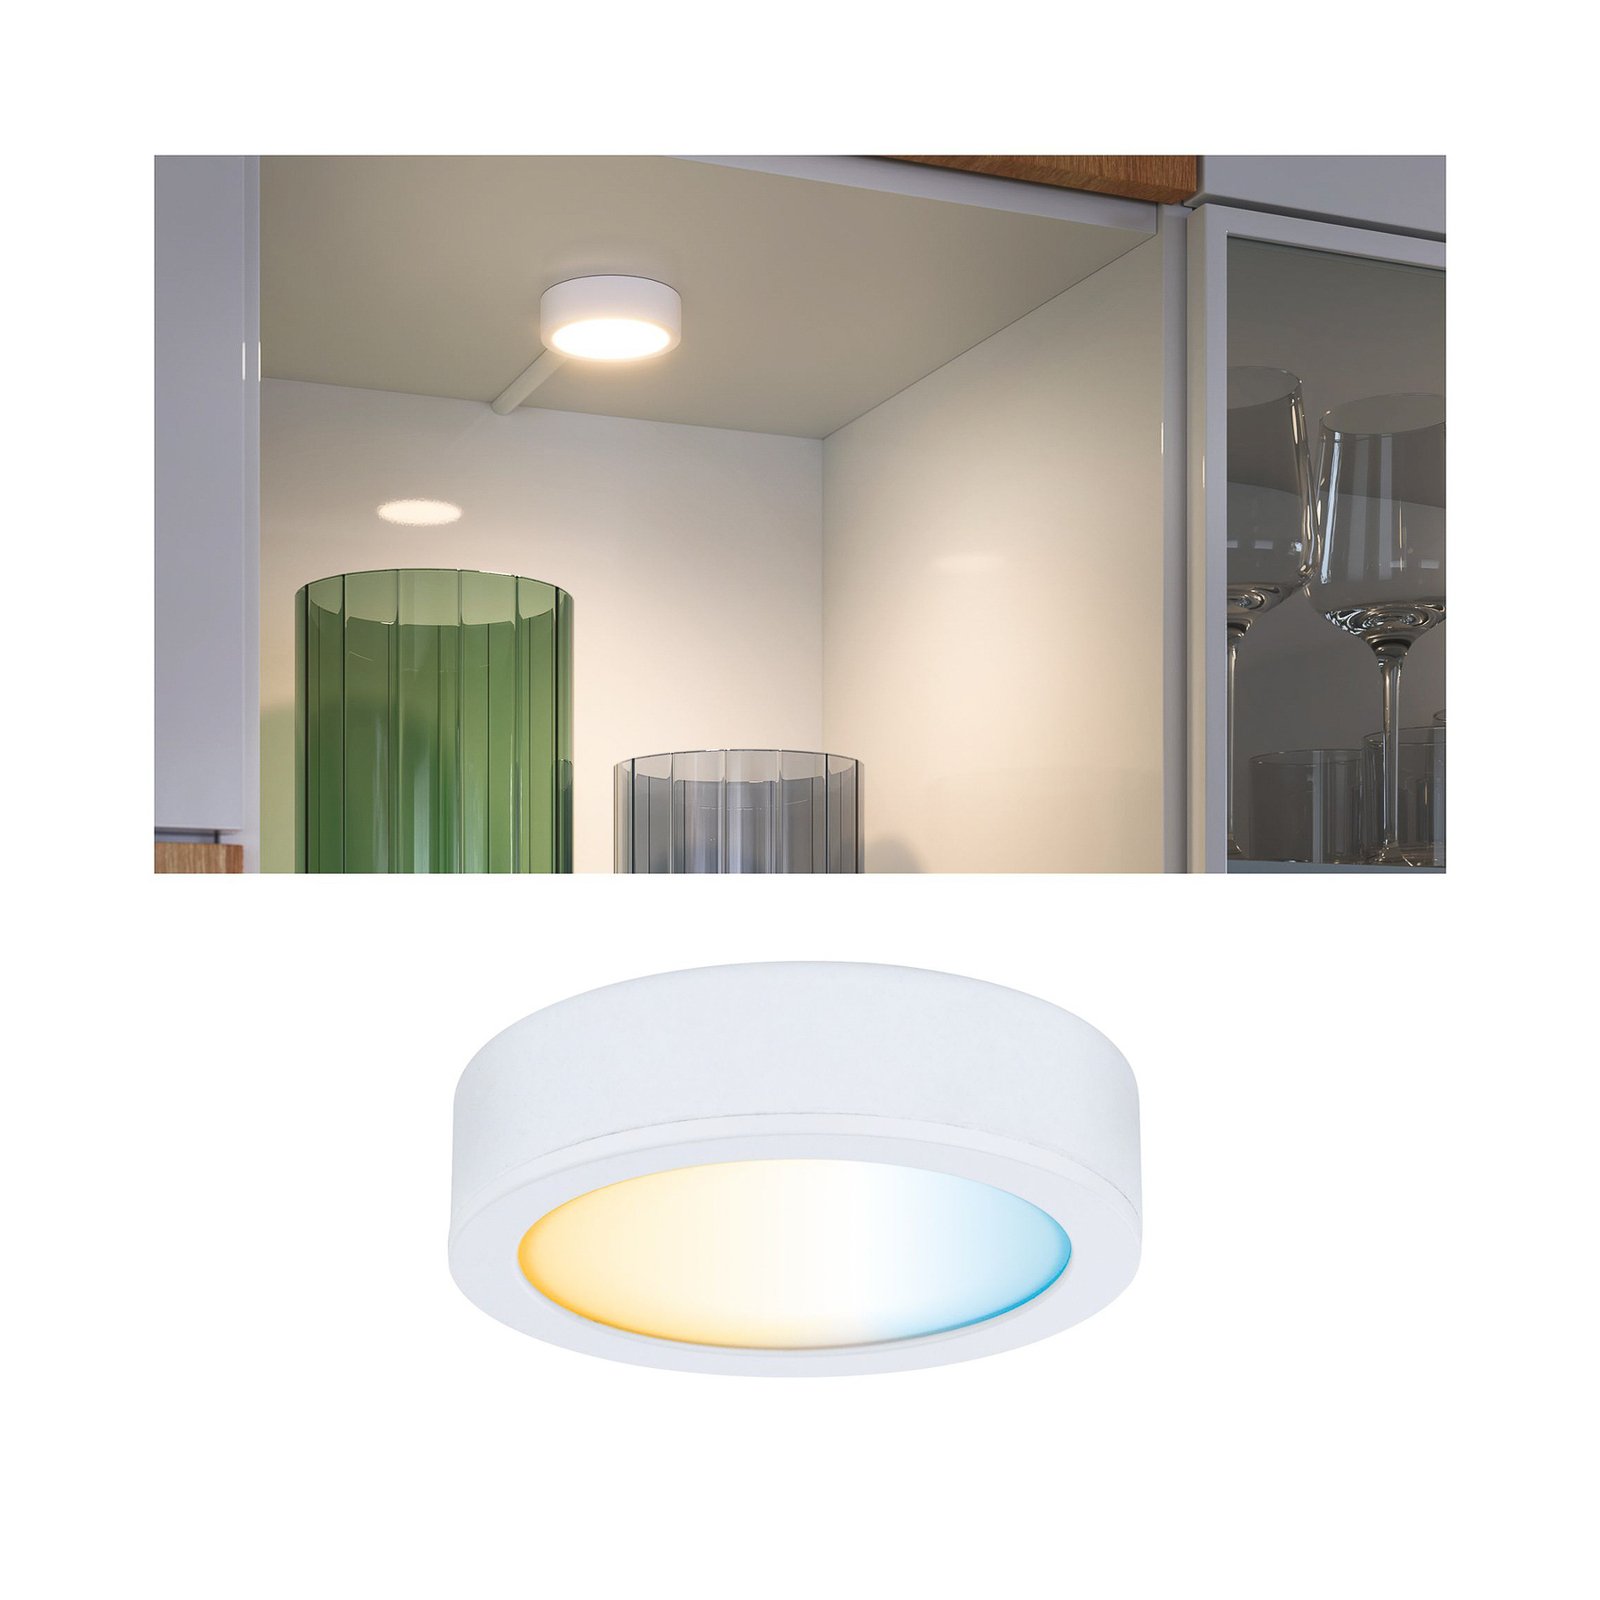 Paulmann Clever Connect Disc lampe meuble, blanche